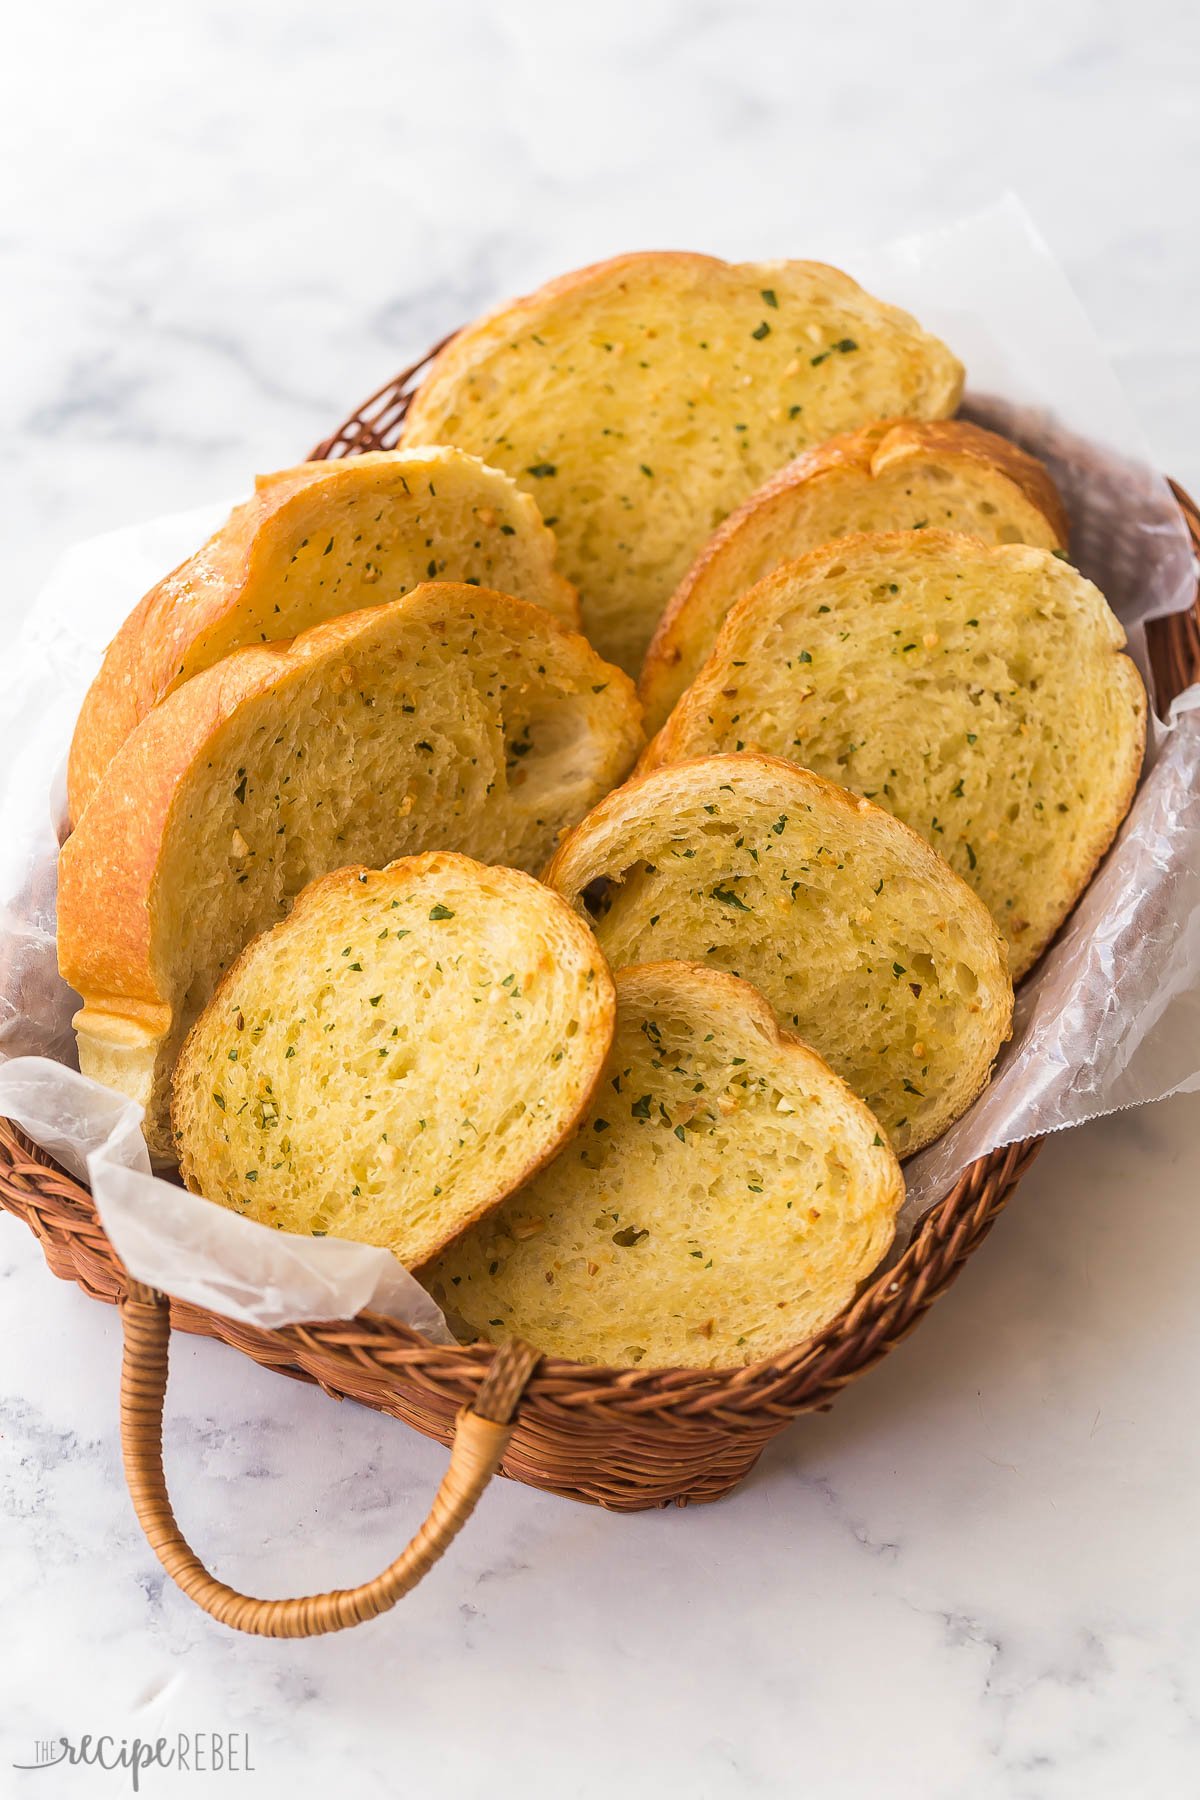 https://www.thereciperebel.com/wp-content/uploads/2021/10/garlic-bread-garlic-butter-www.thereciperebel.com-1200-21-of-26.jpg